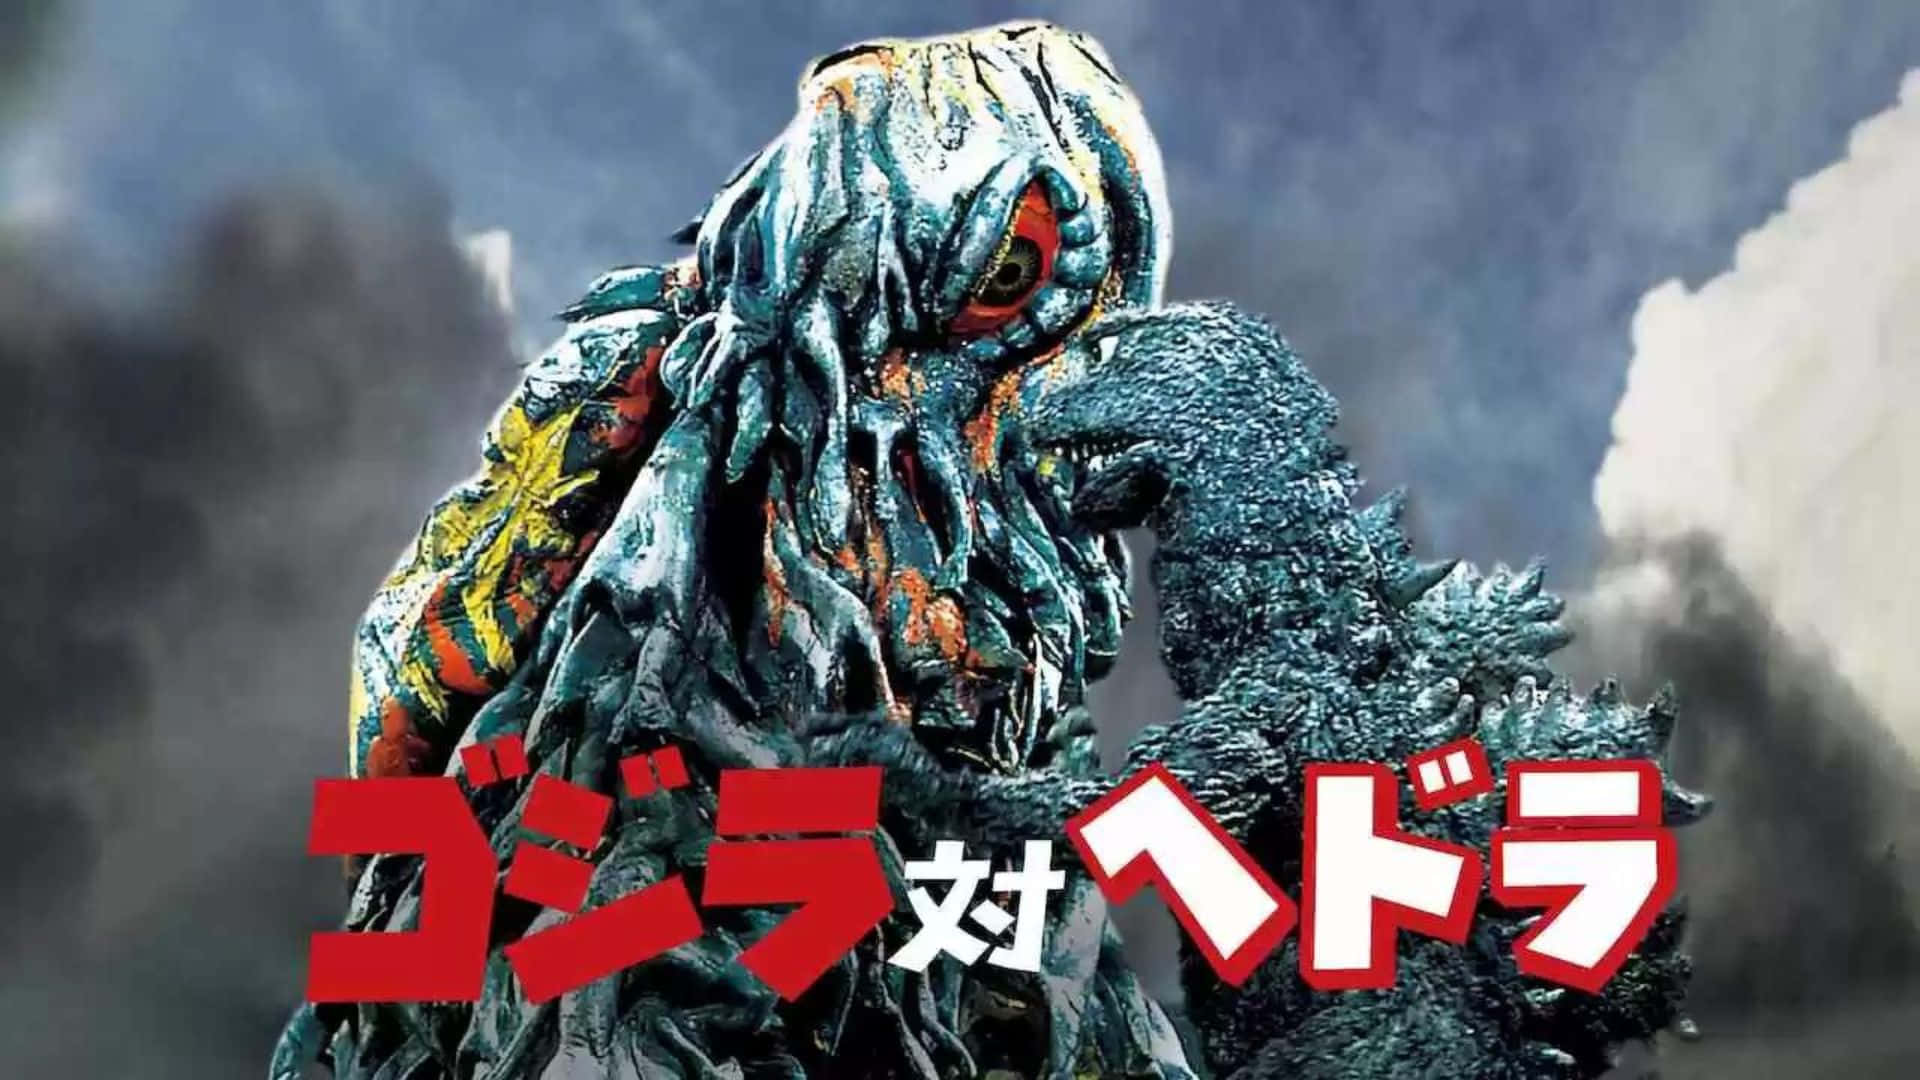 Godzilla battles Hedorah in an epic showdown. Wallpaper